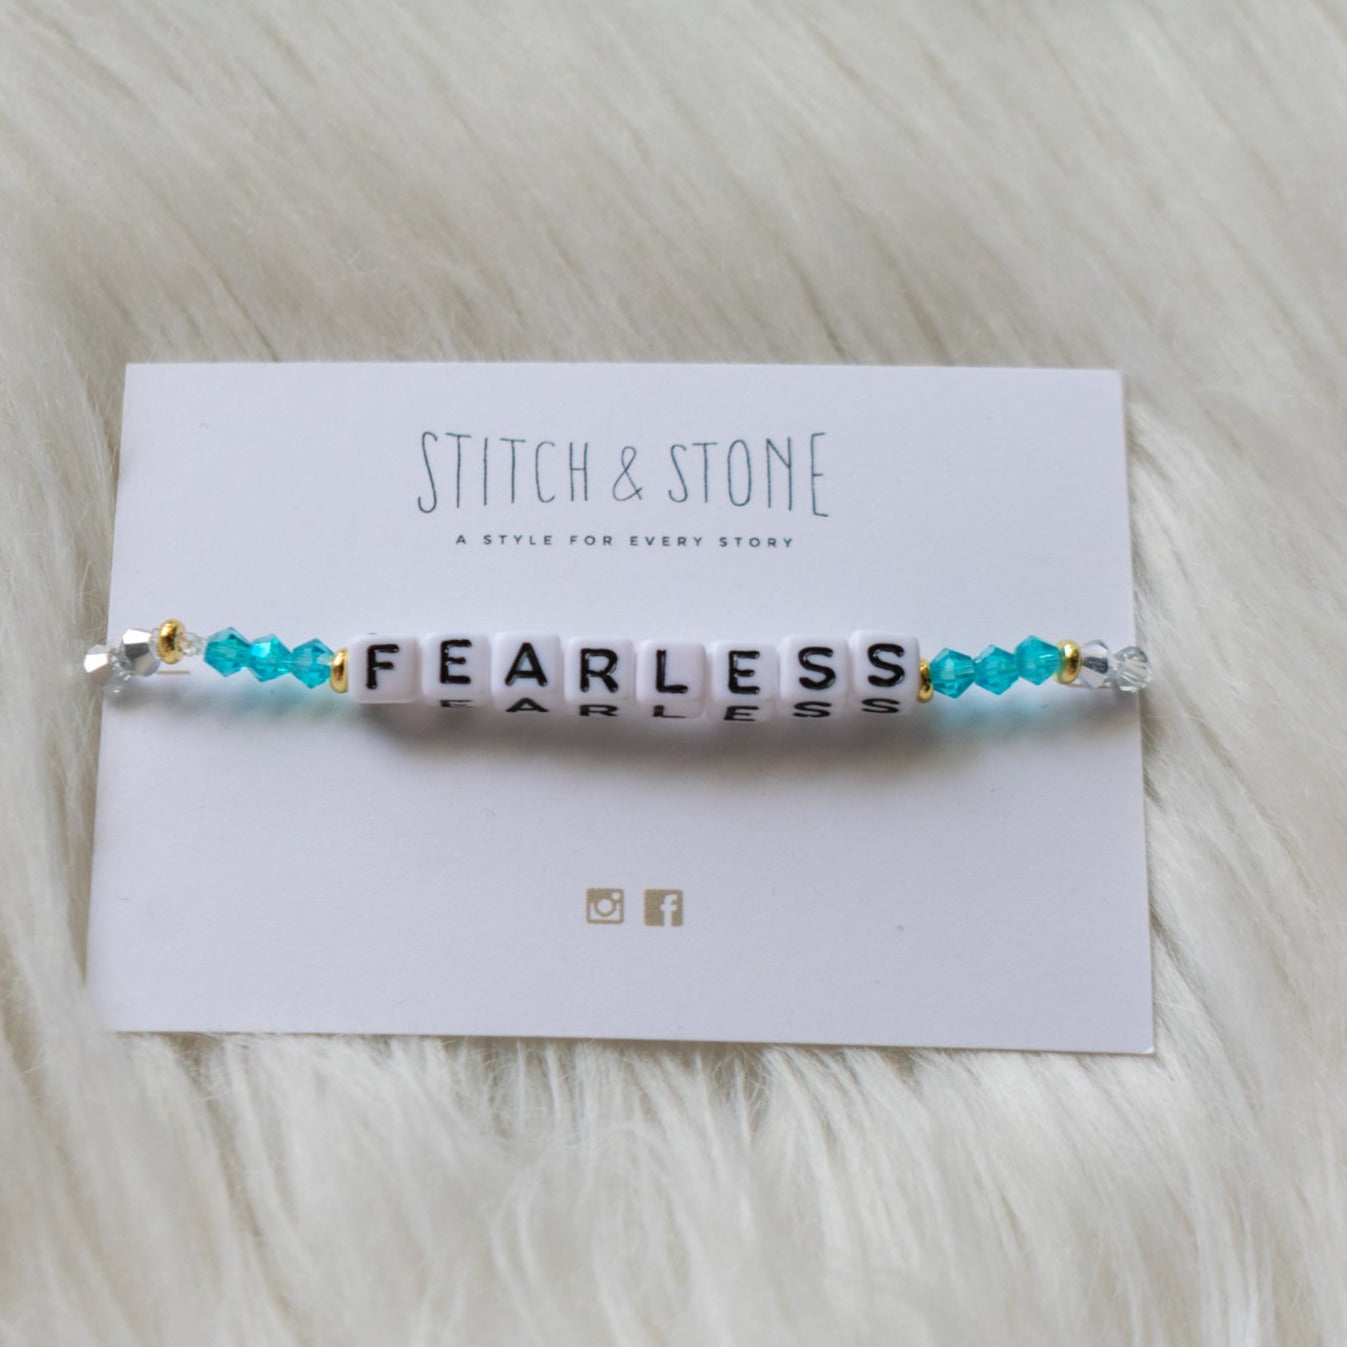 Stitch "Fearless" Bracelet